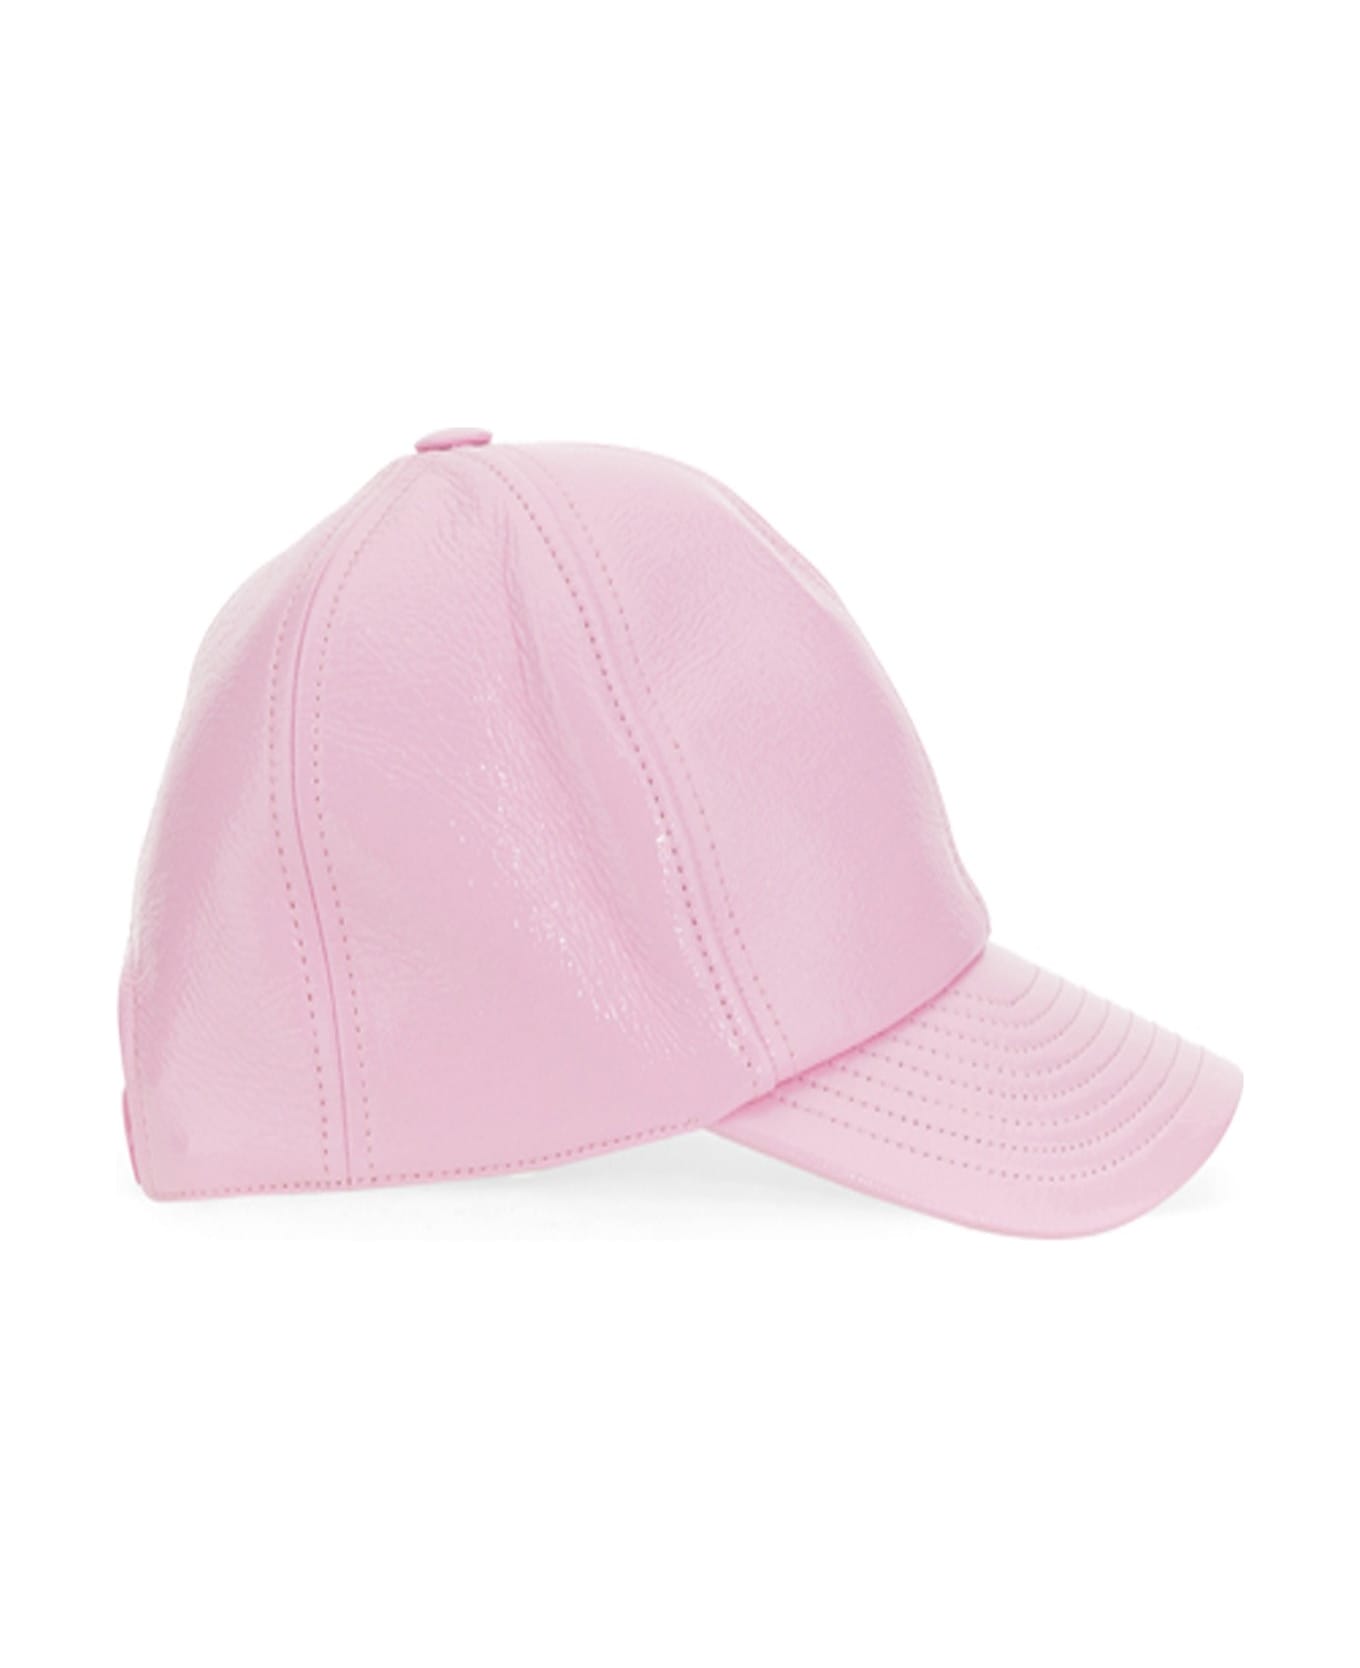 Courrèges Baseball Cap - Candy Pink